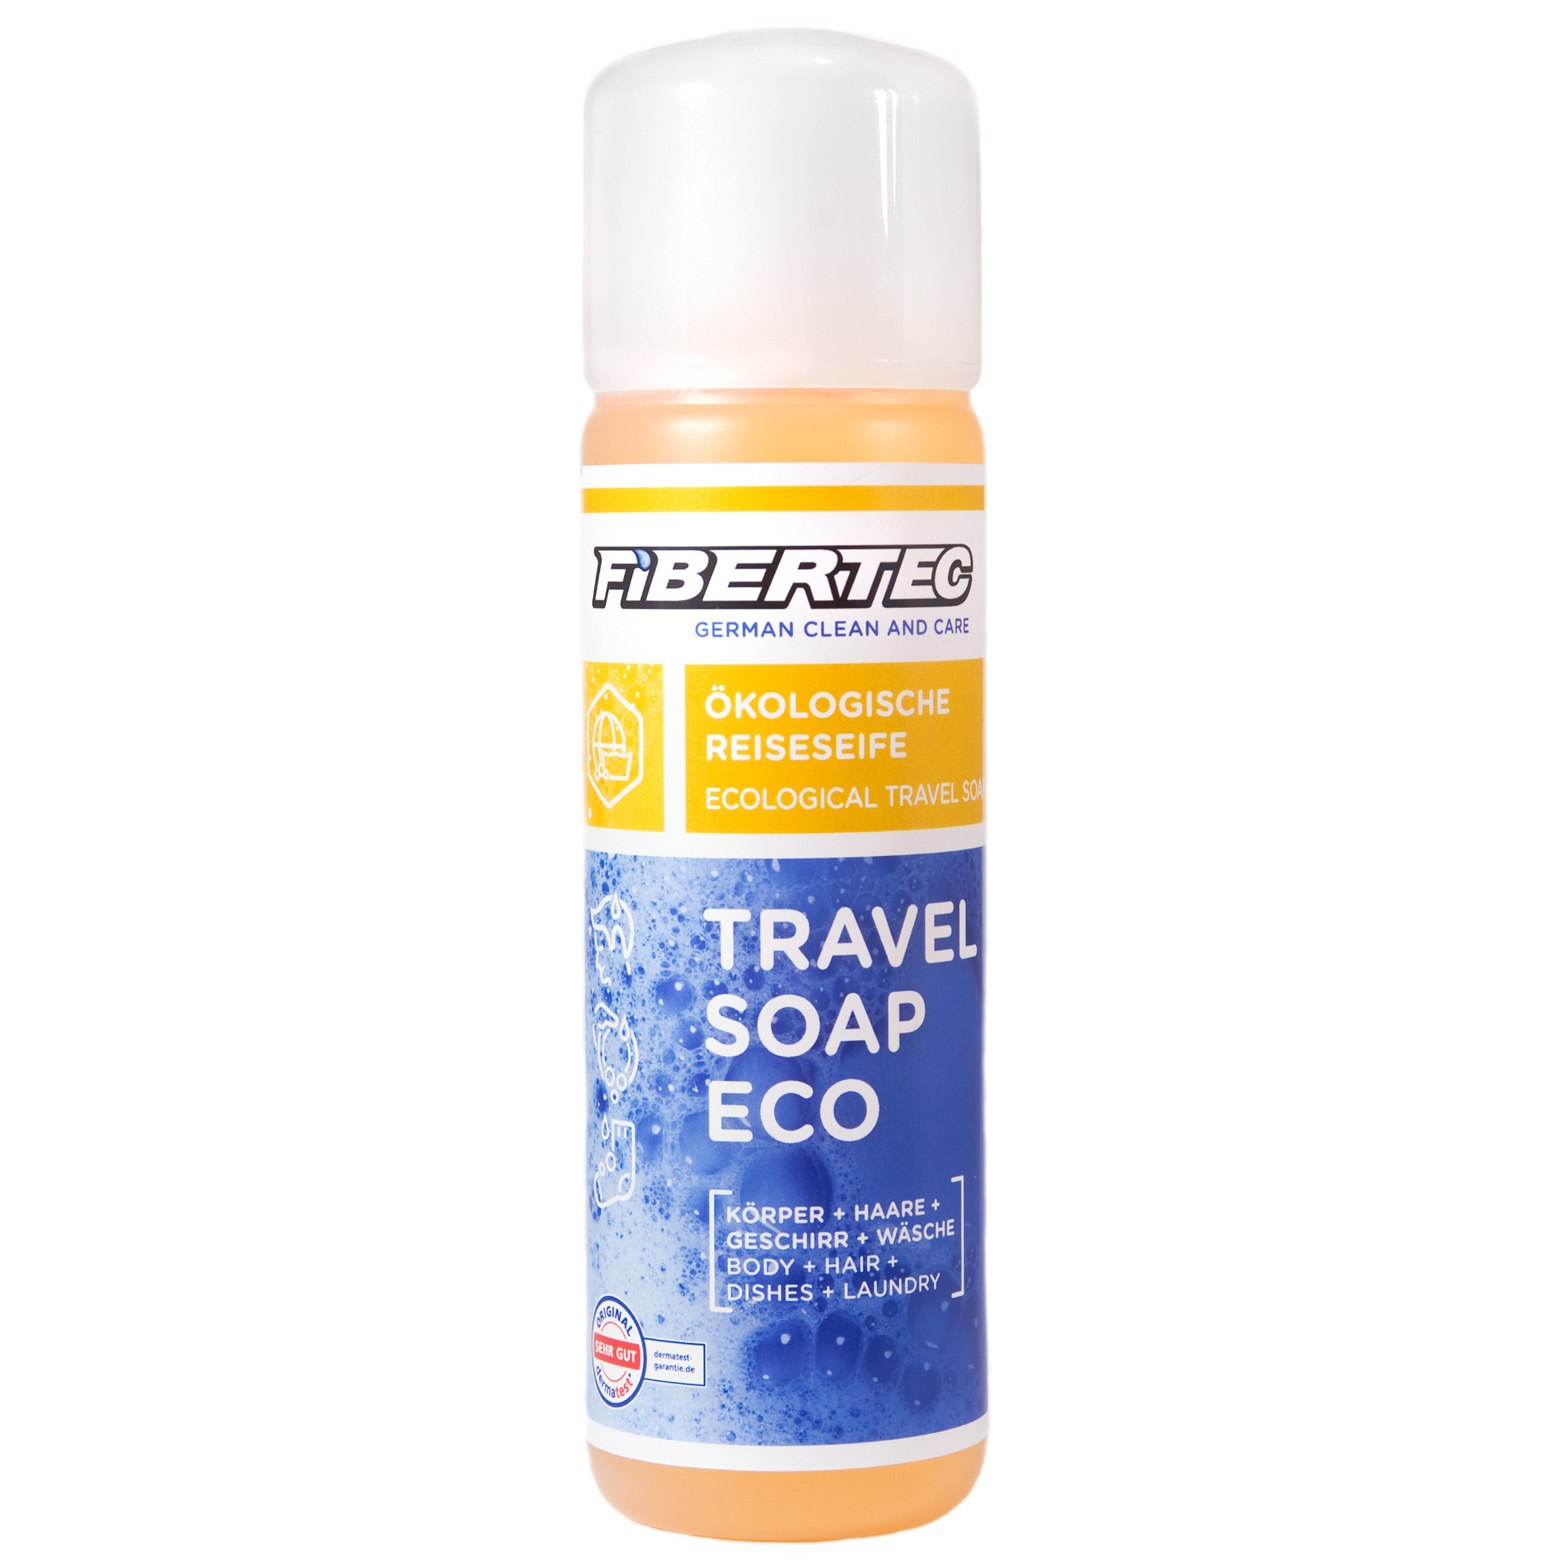 Picture of Fibertec Travel Soap Eco - 250ml